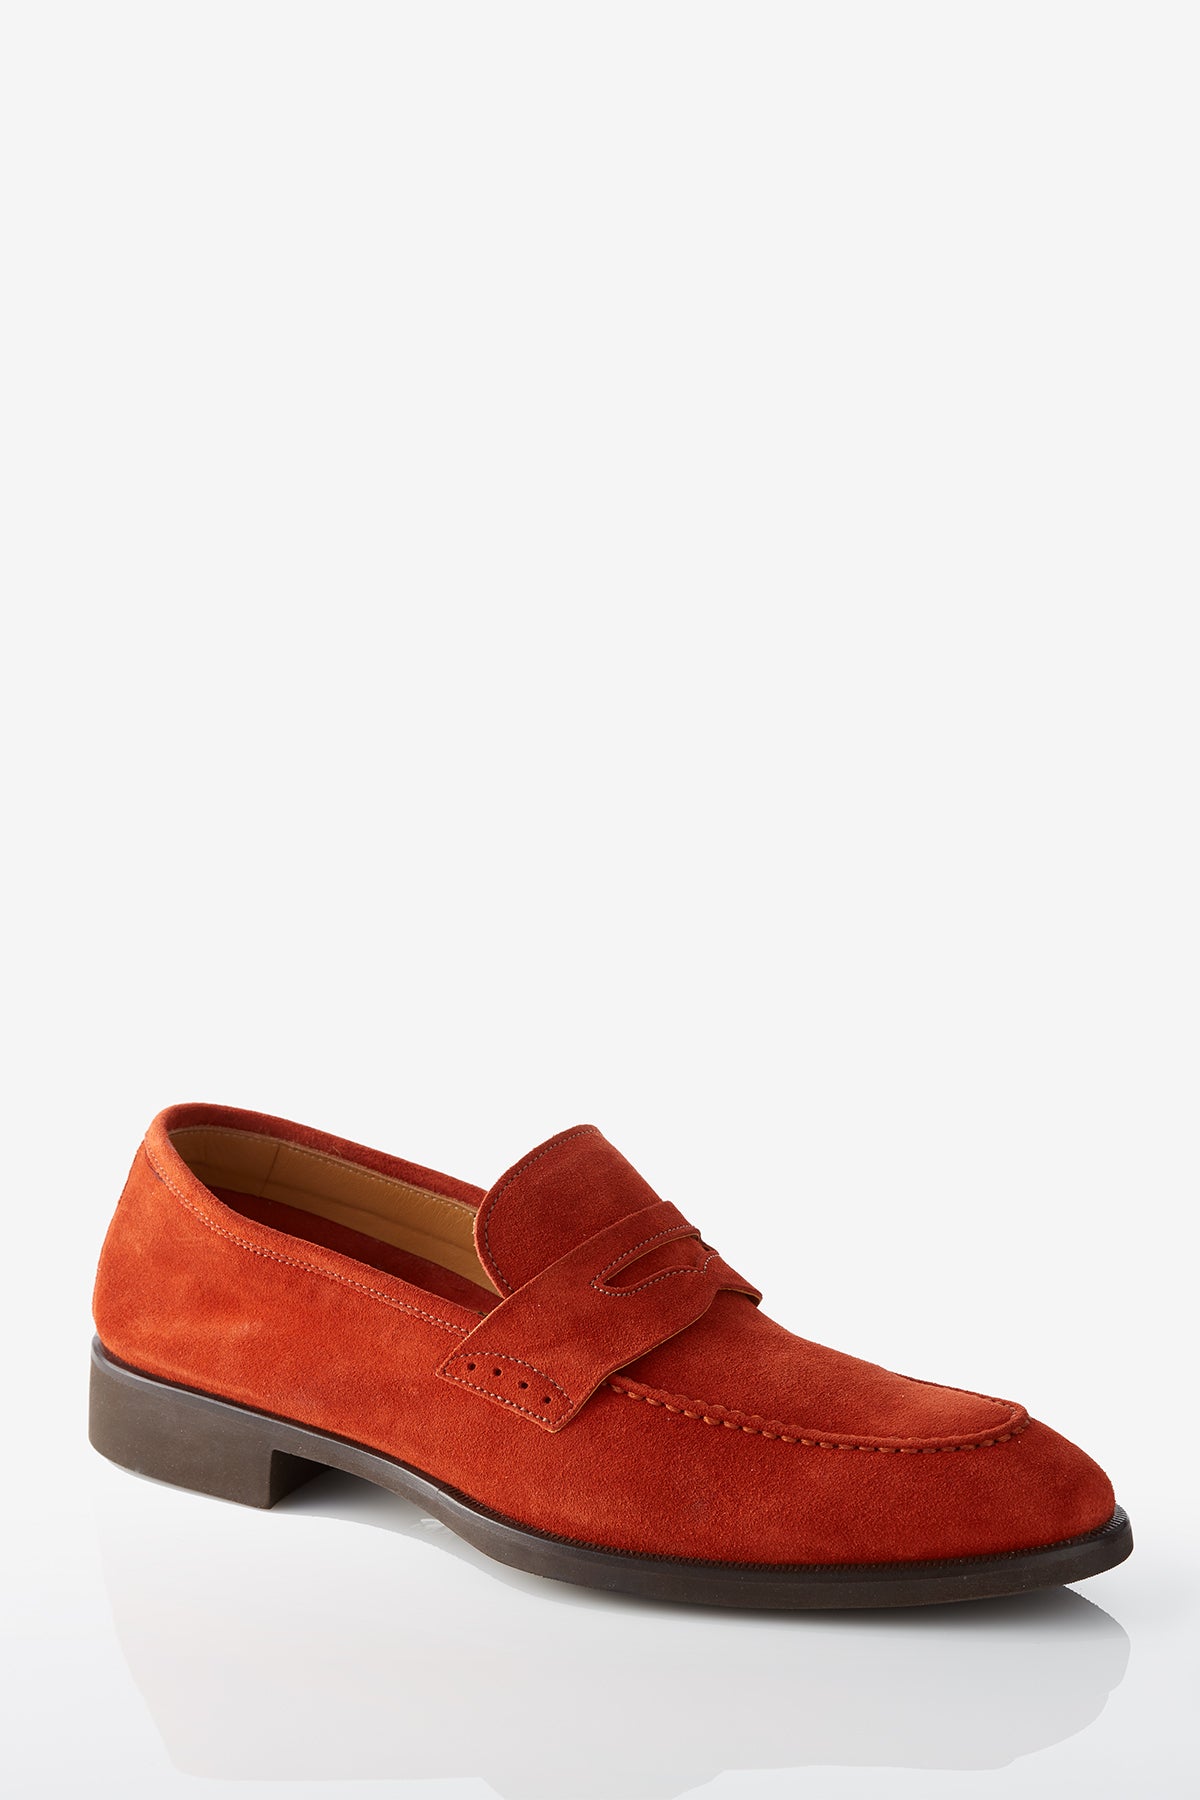 orange suede loafers